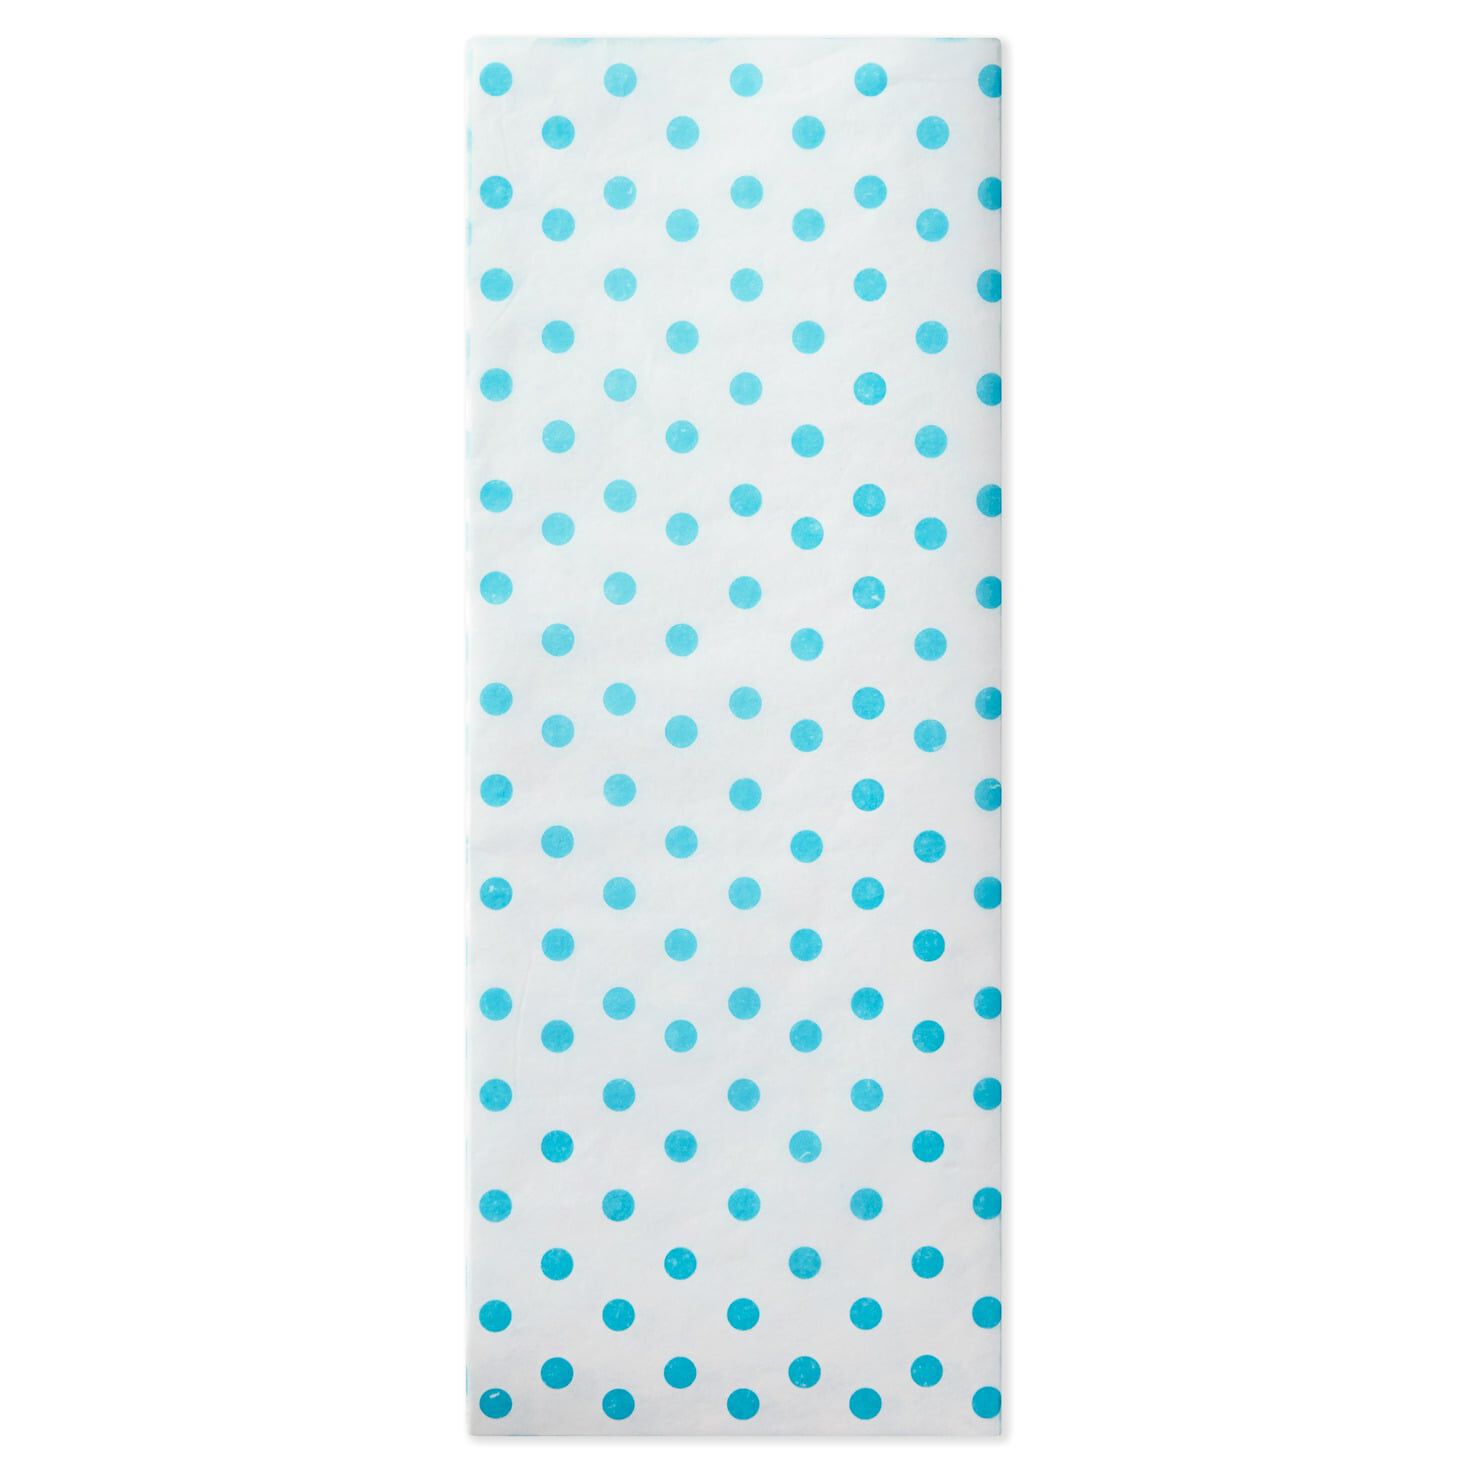 Flagermus camouflage På kanten Aqua Blue Polka Dots Tissue Paper, 6 sheets - Tissue - Hallmark